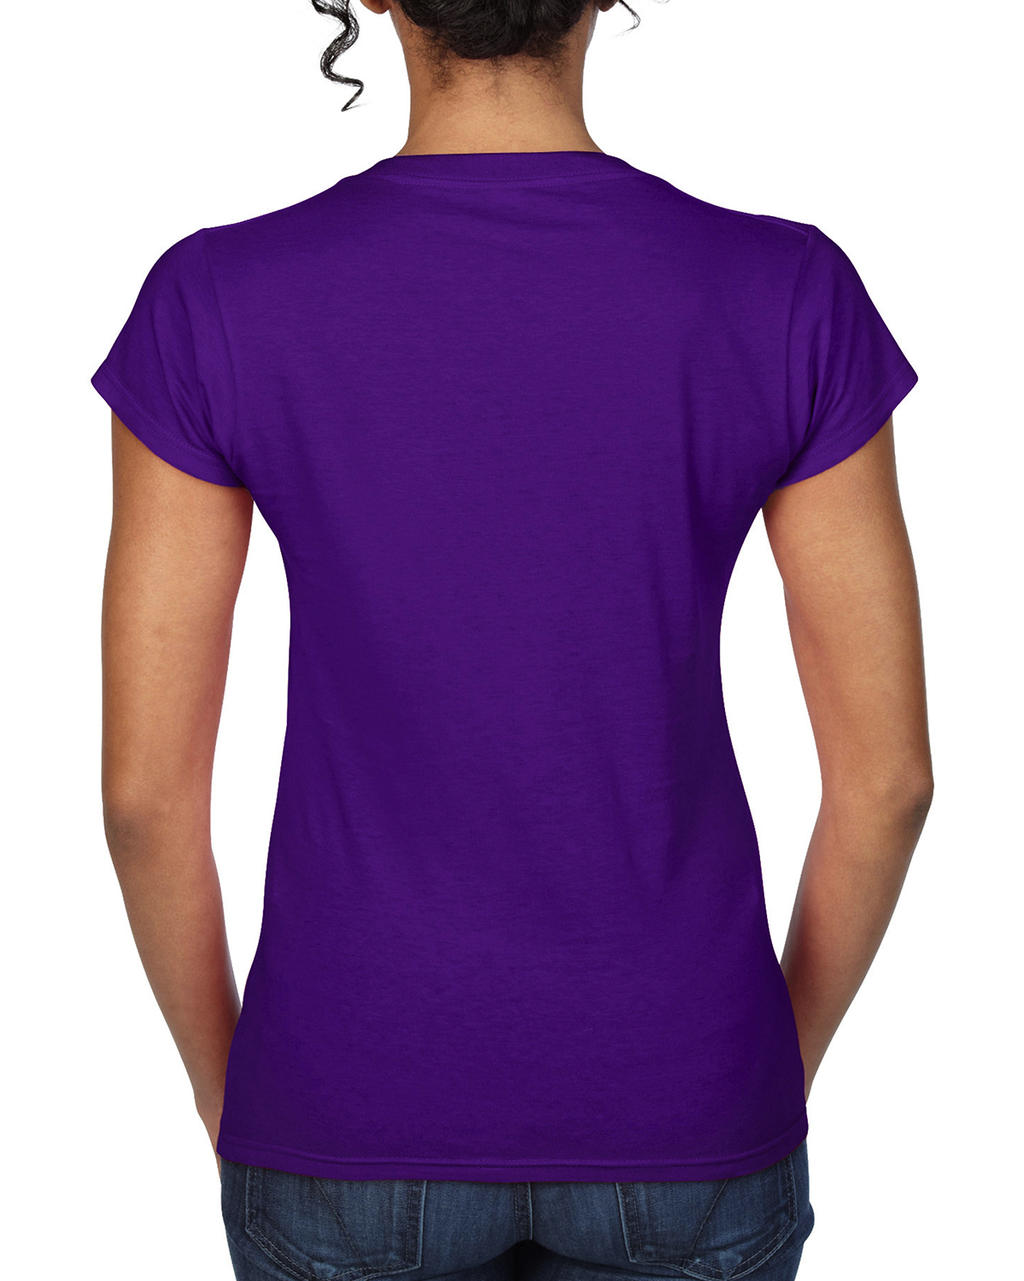 Ladies Softstyle® V-Neck T-Shirt